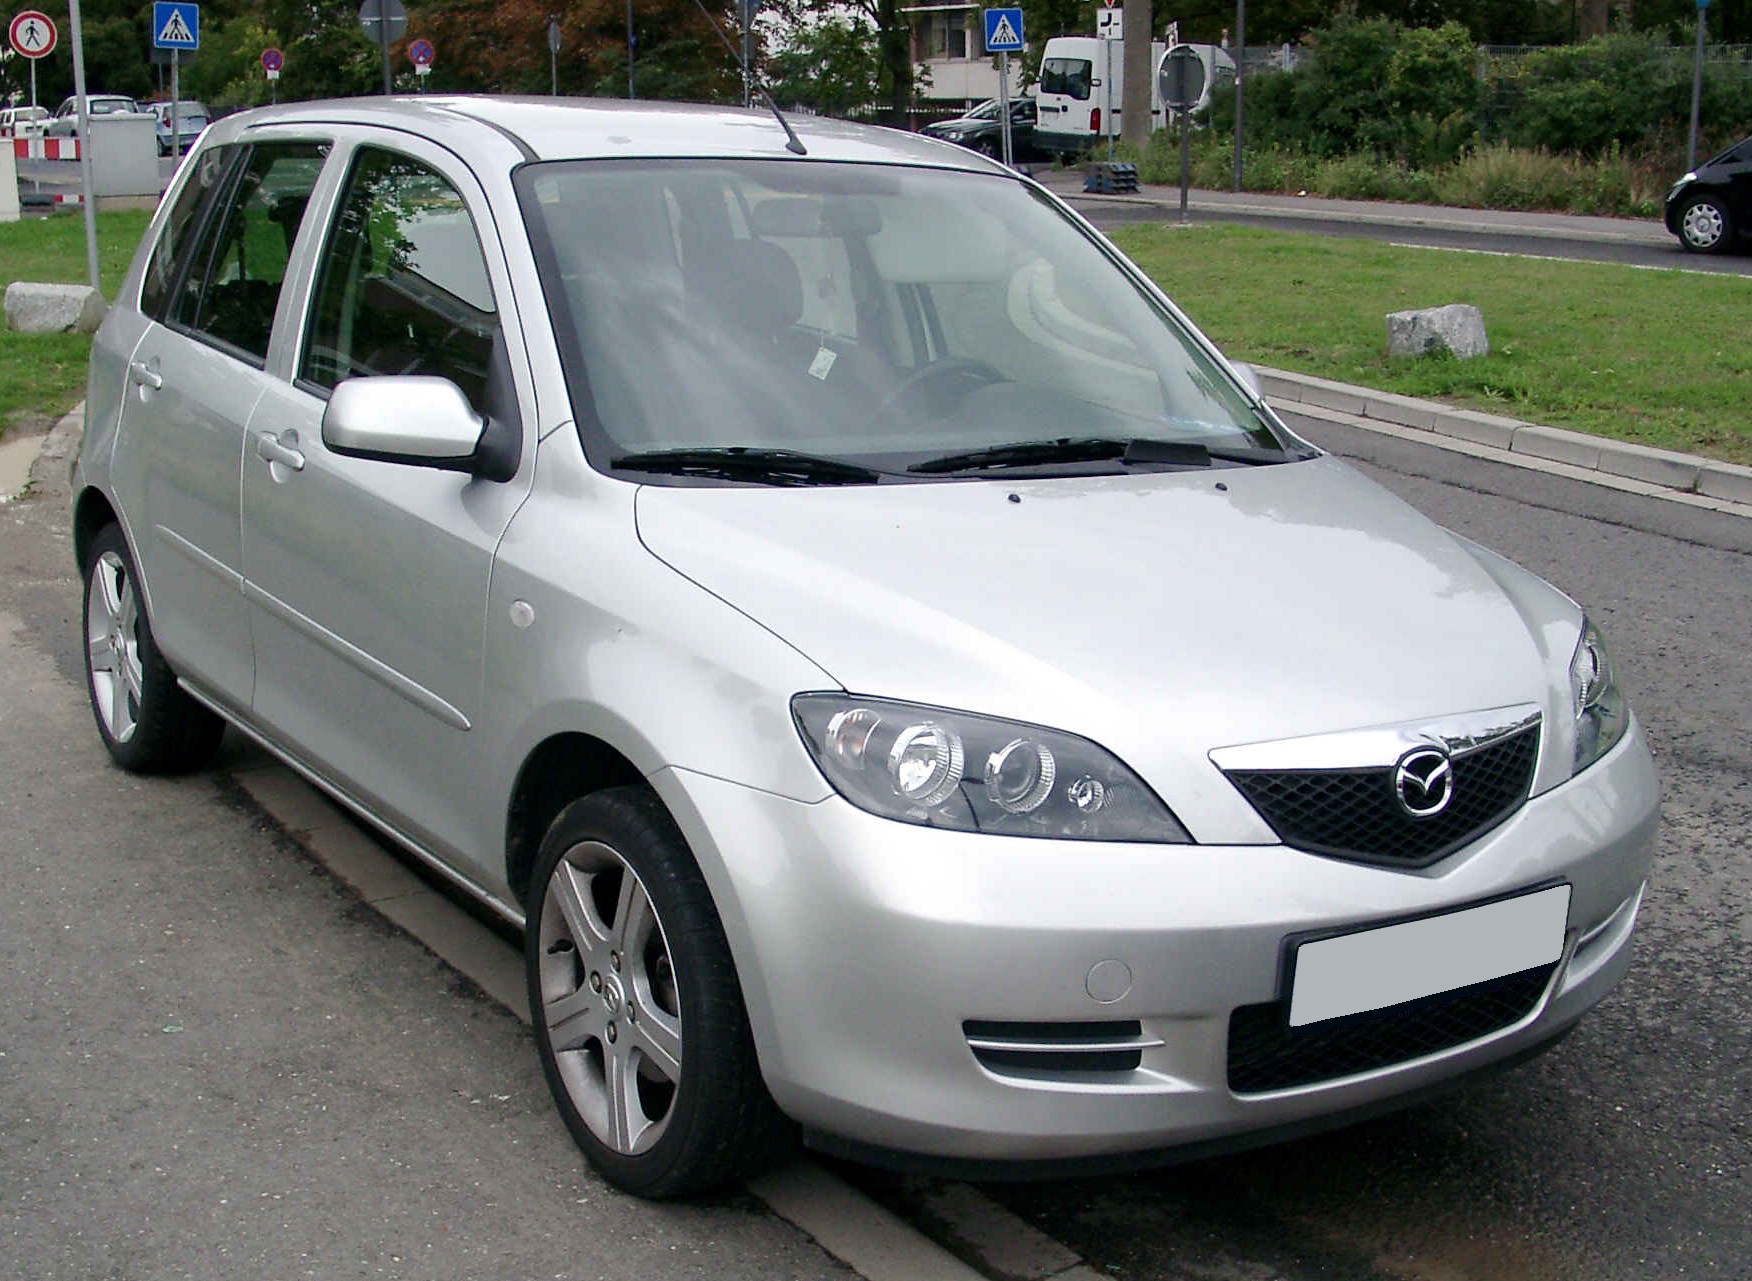 File:Mazda 2 front 20080820.jpg - Wikimedia Commons